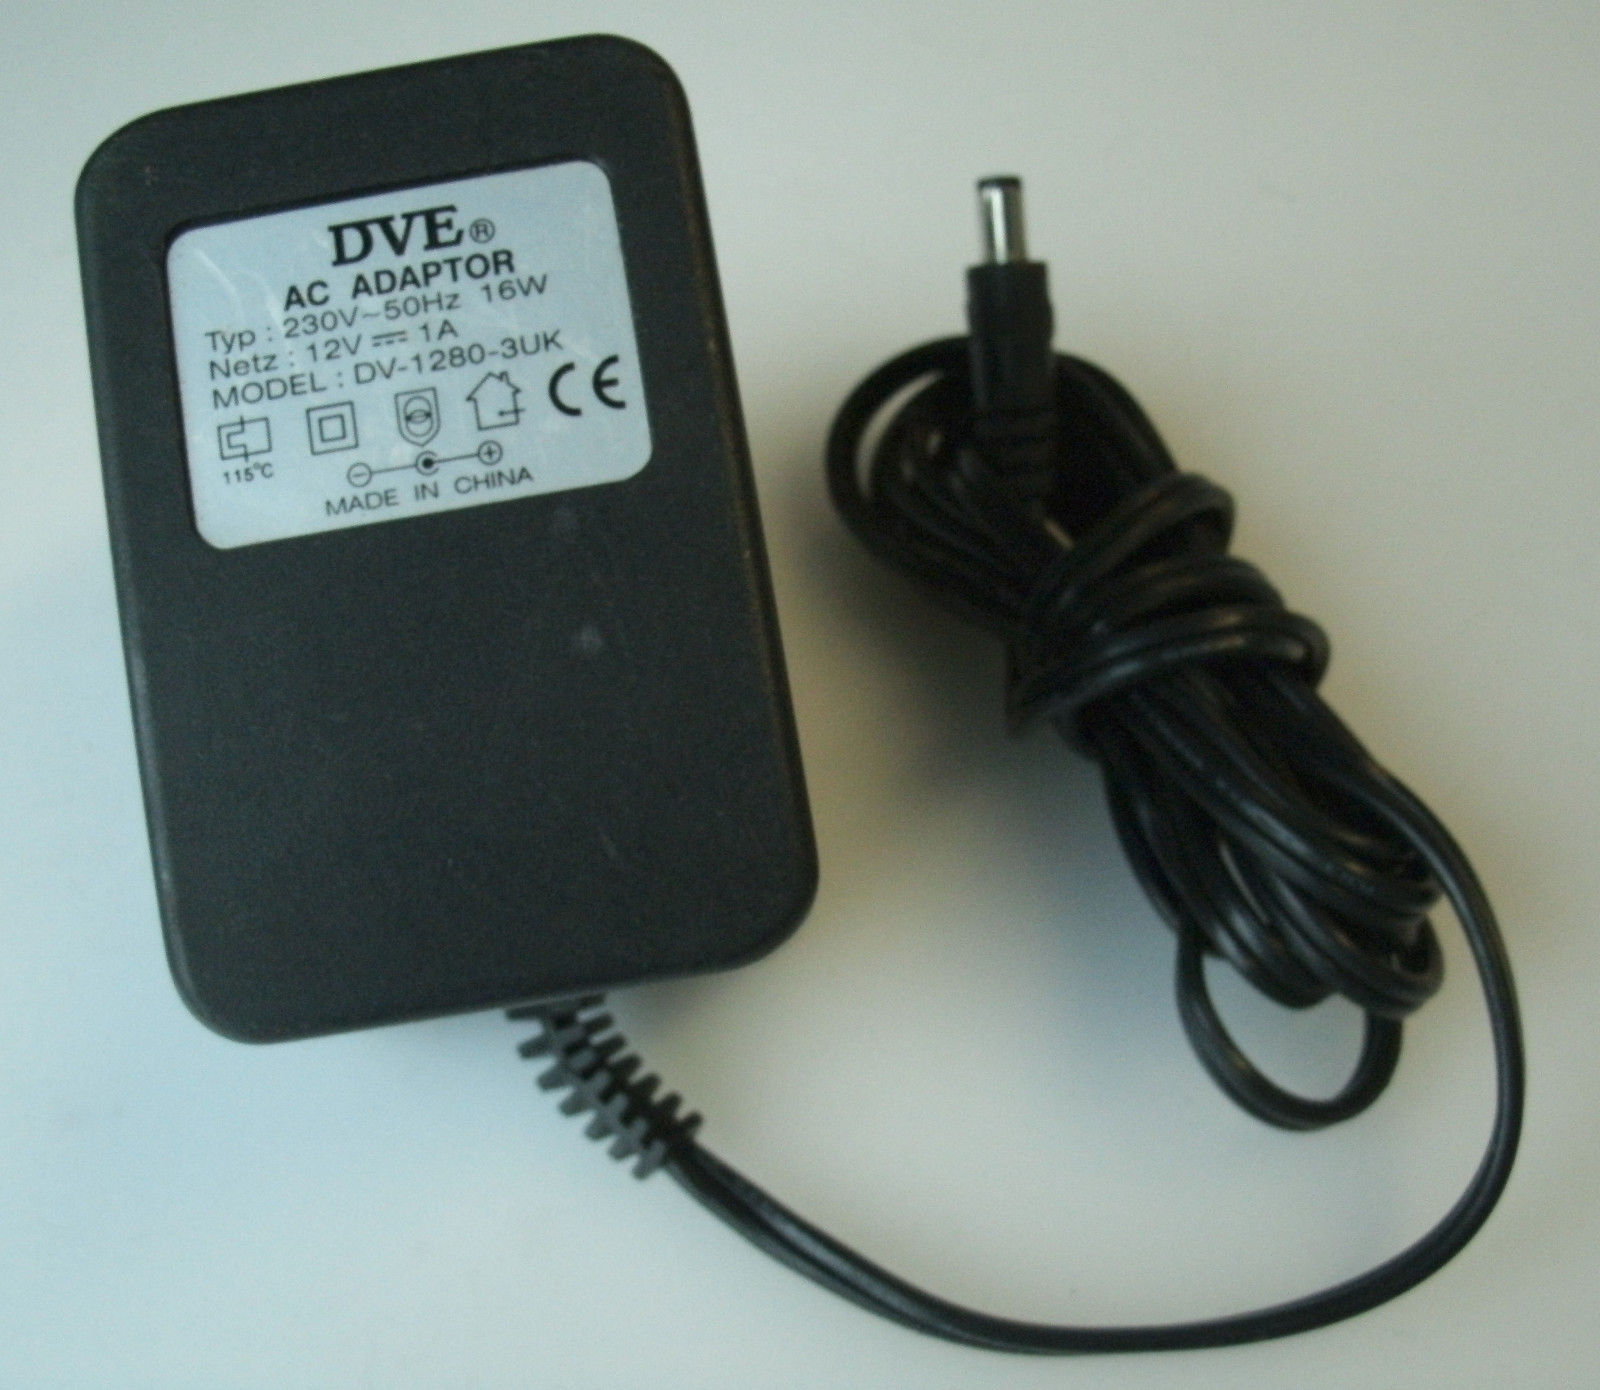 New 12V 1A UK PLUG DVE DV-1280-3UK Power Supply AC ADAPTER